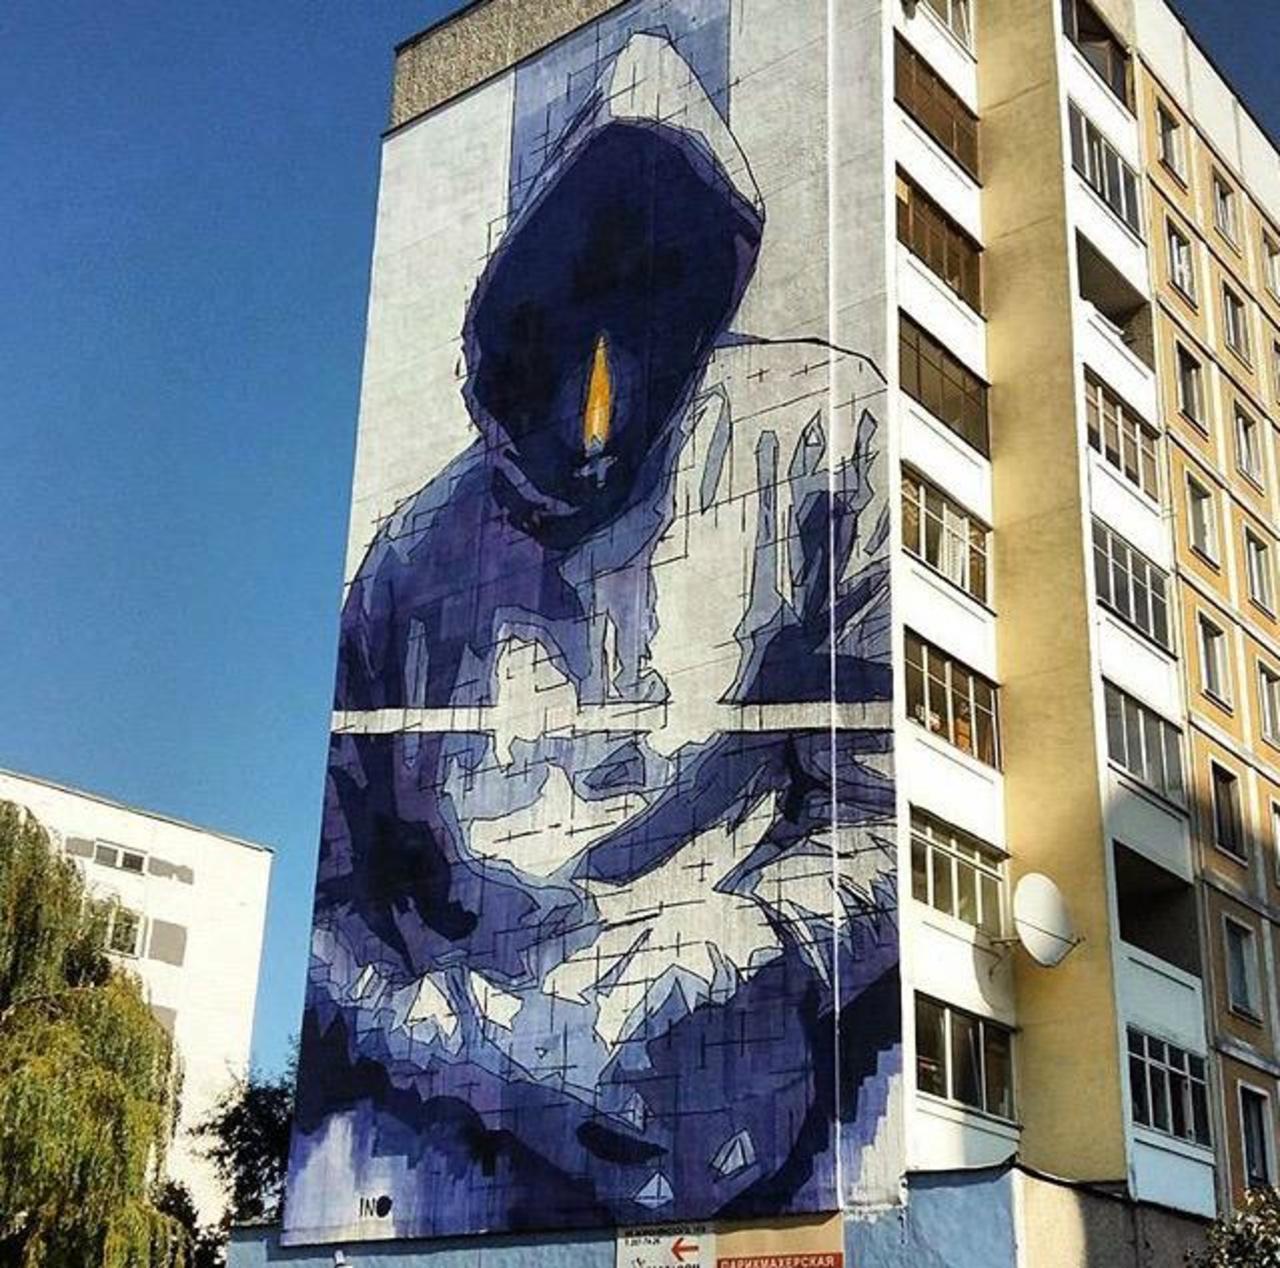 RT @GoogleStreetArt: 'Man With No Name' 
New Street Art by iNO in Minsk, Belarus 

#art #graffiti #mural #streetart http://t.co/CK5X6XoD9s